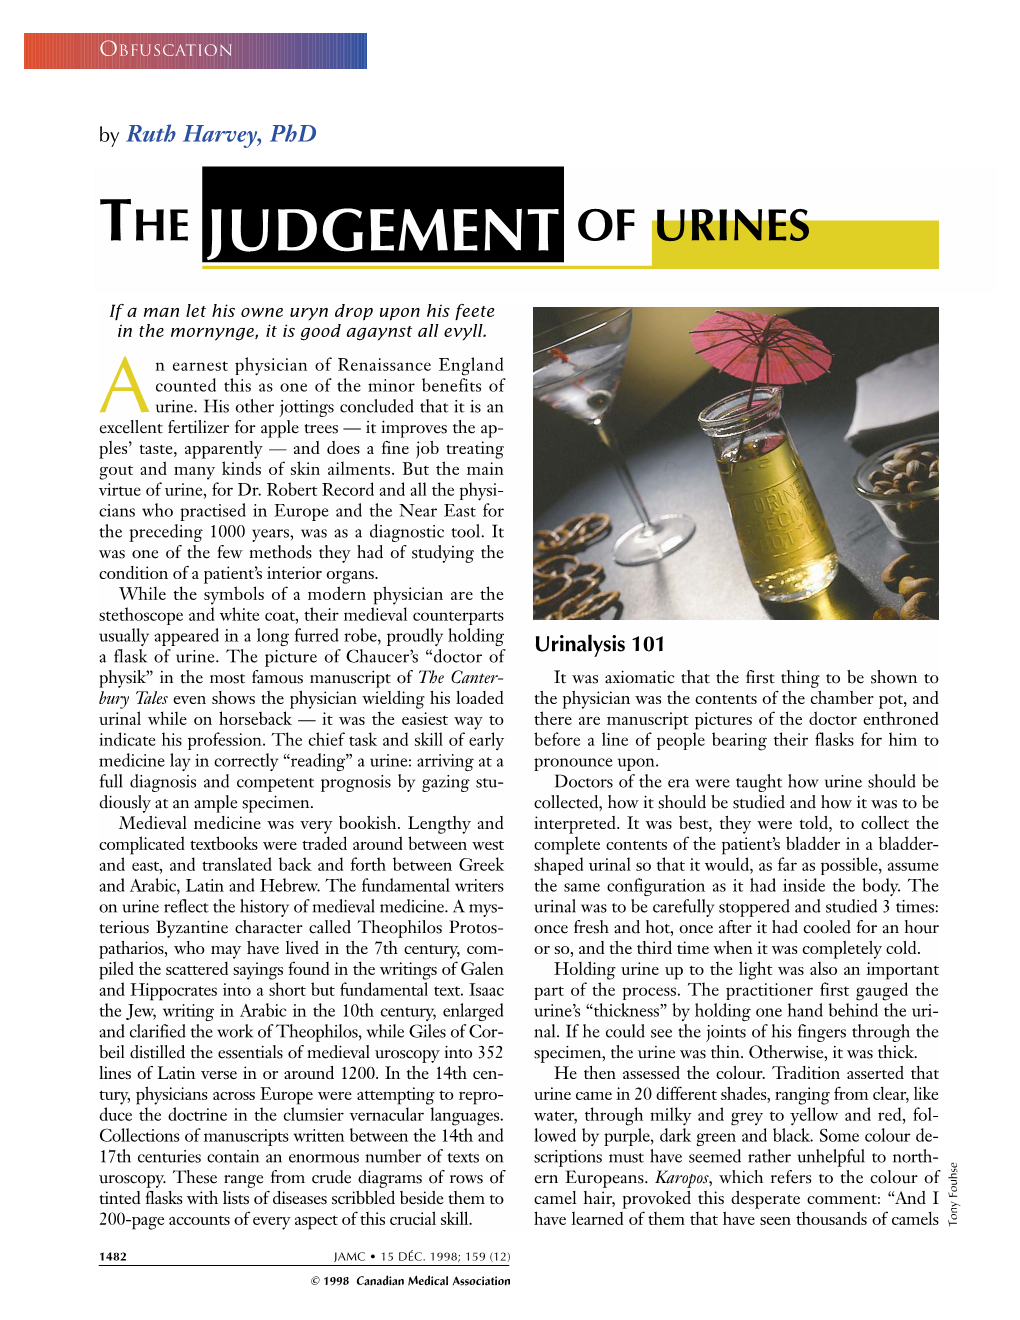 The Judgement of Urines